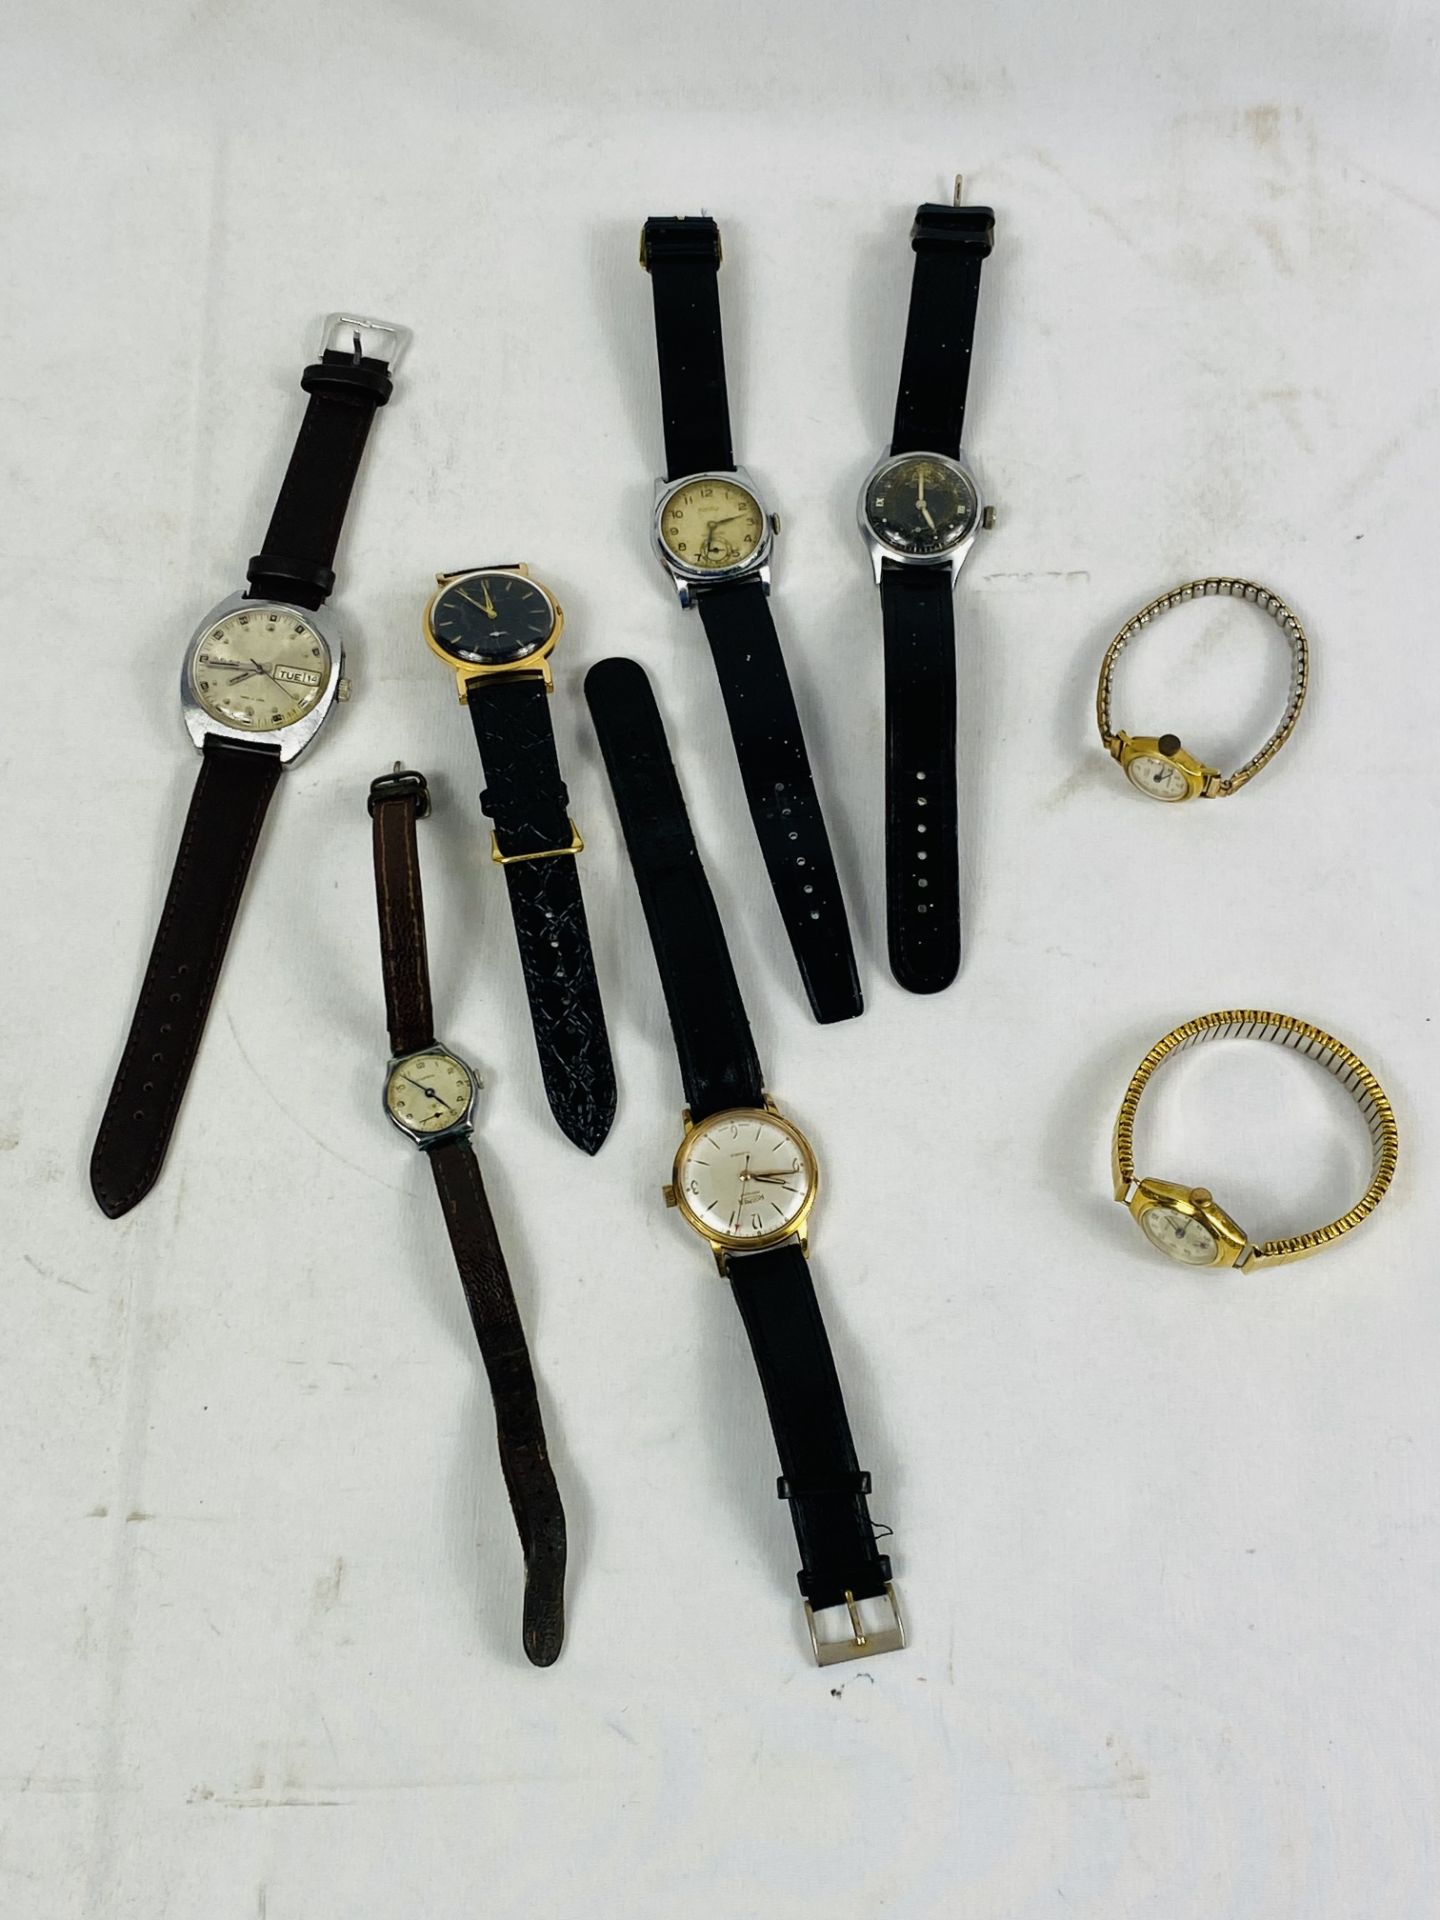 Eight mechanical wristwatches